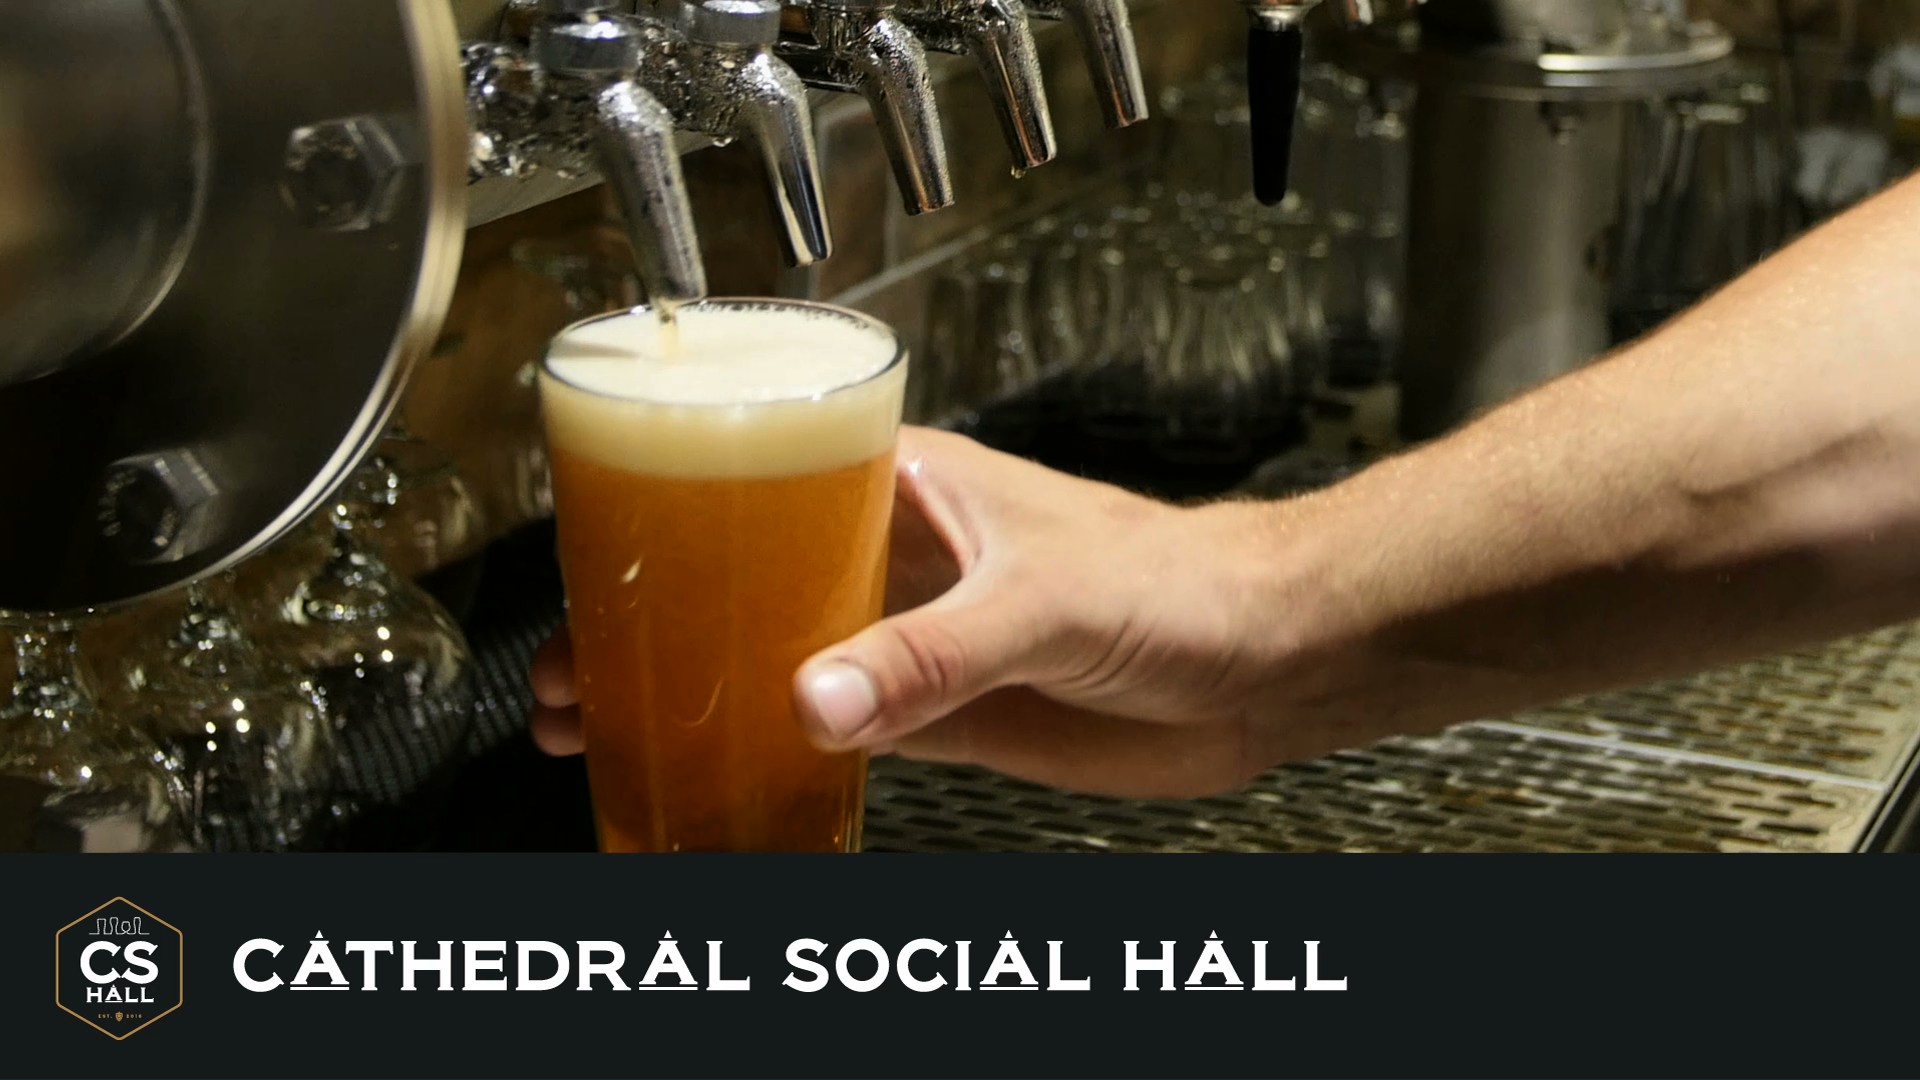 Cathedral Social Hall, Social, Cathedral Social Hall - Team - Matt, Portfolio Image, Fun. Social. Place